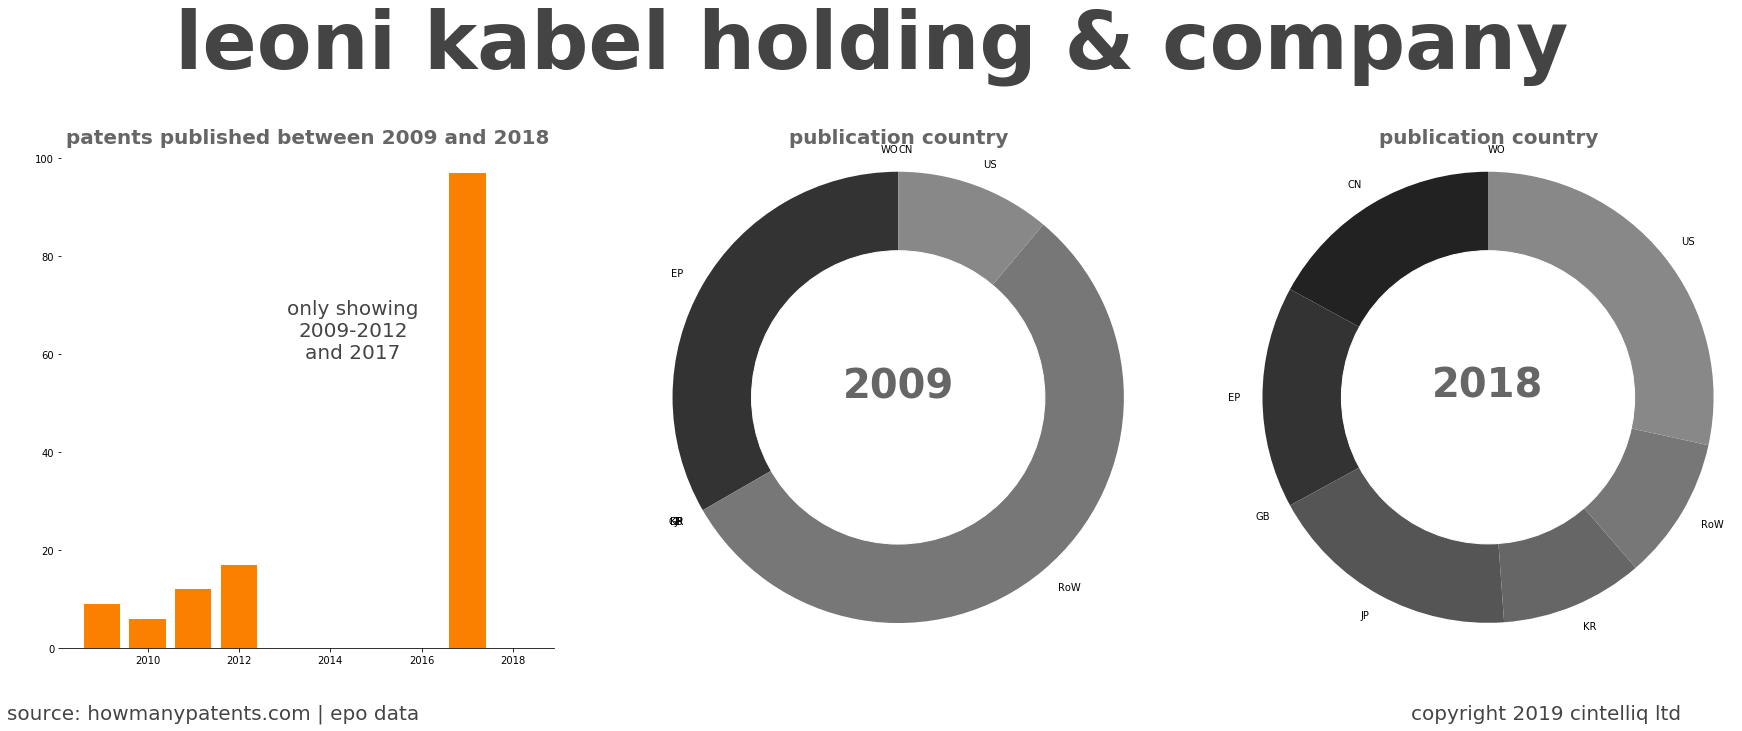 summary of patents for Leoni Kabel Holding & Company